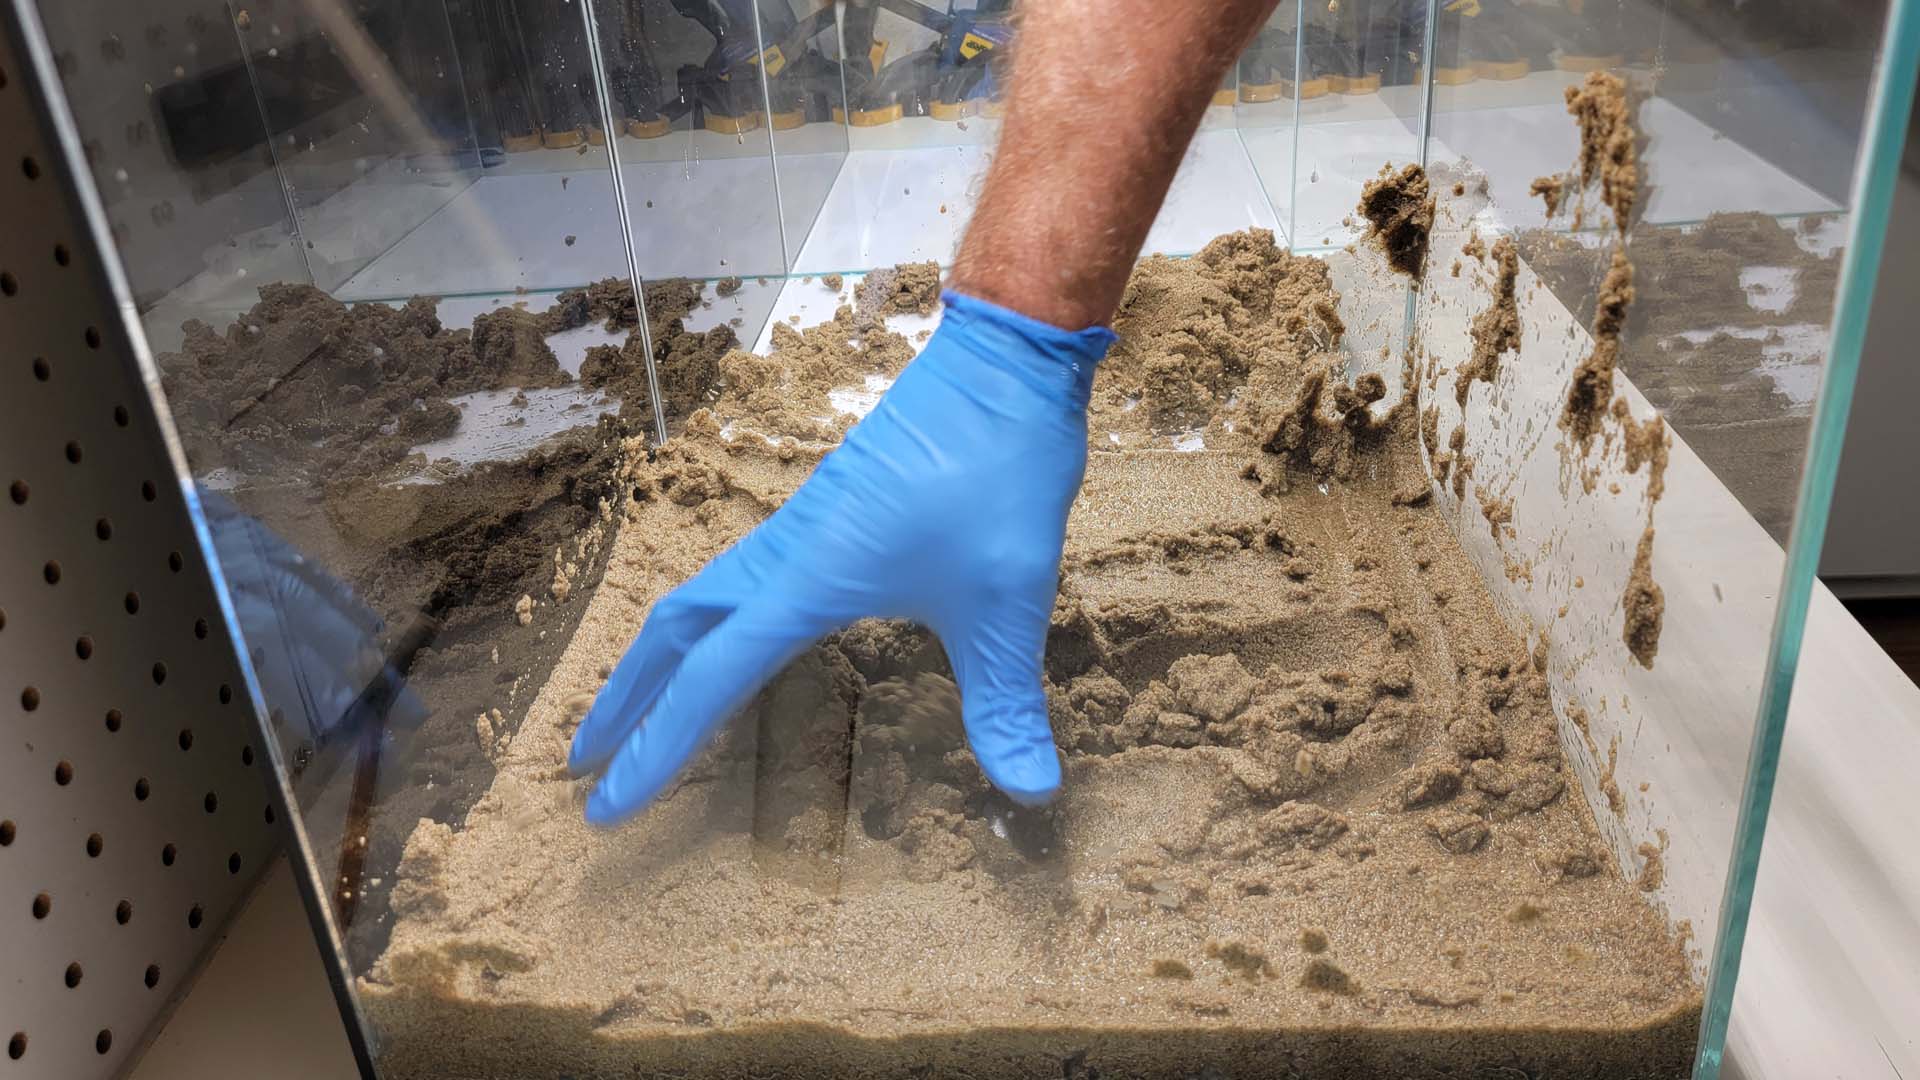 Mixing API Root Tab powder into sand